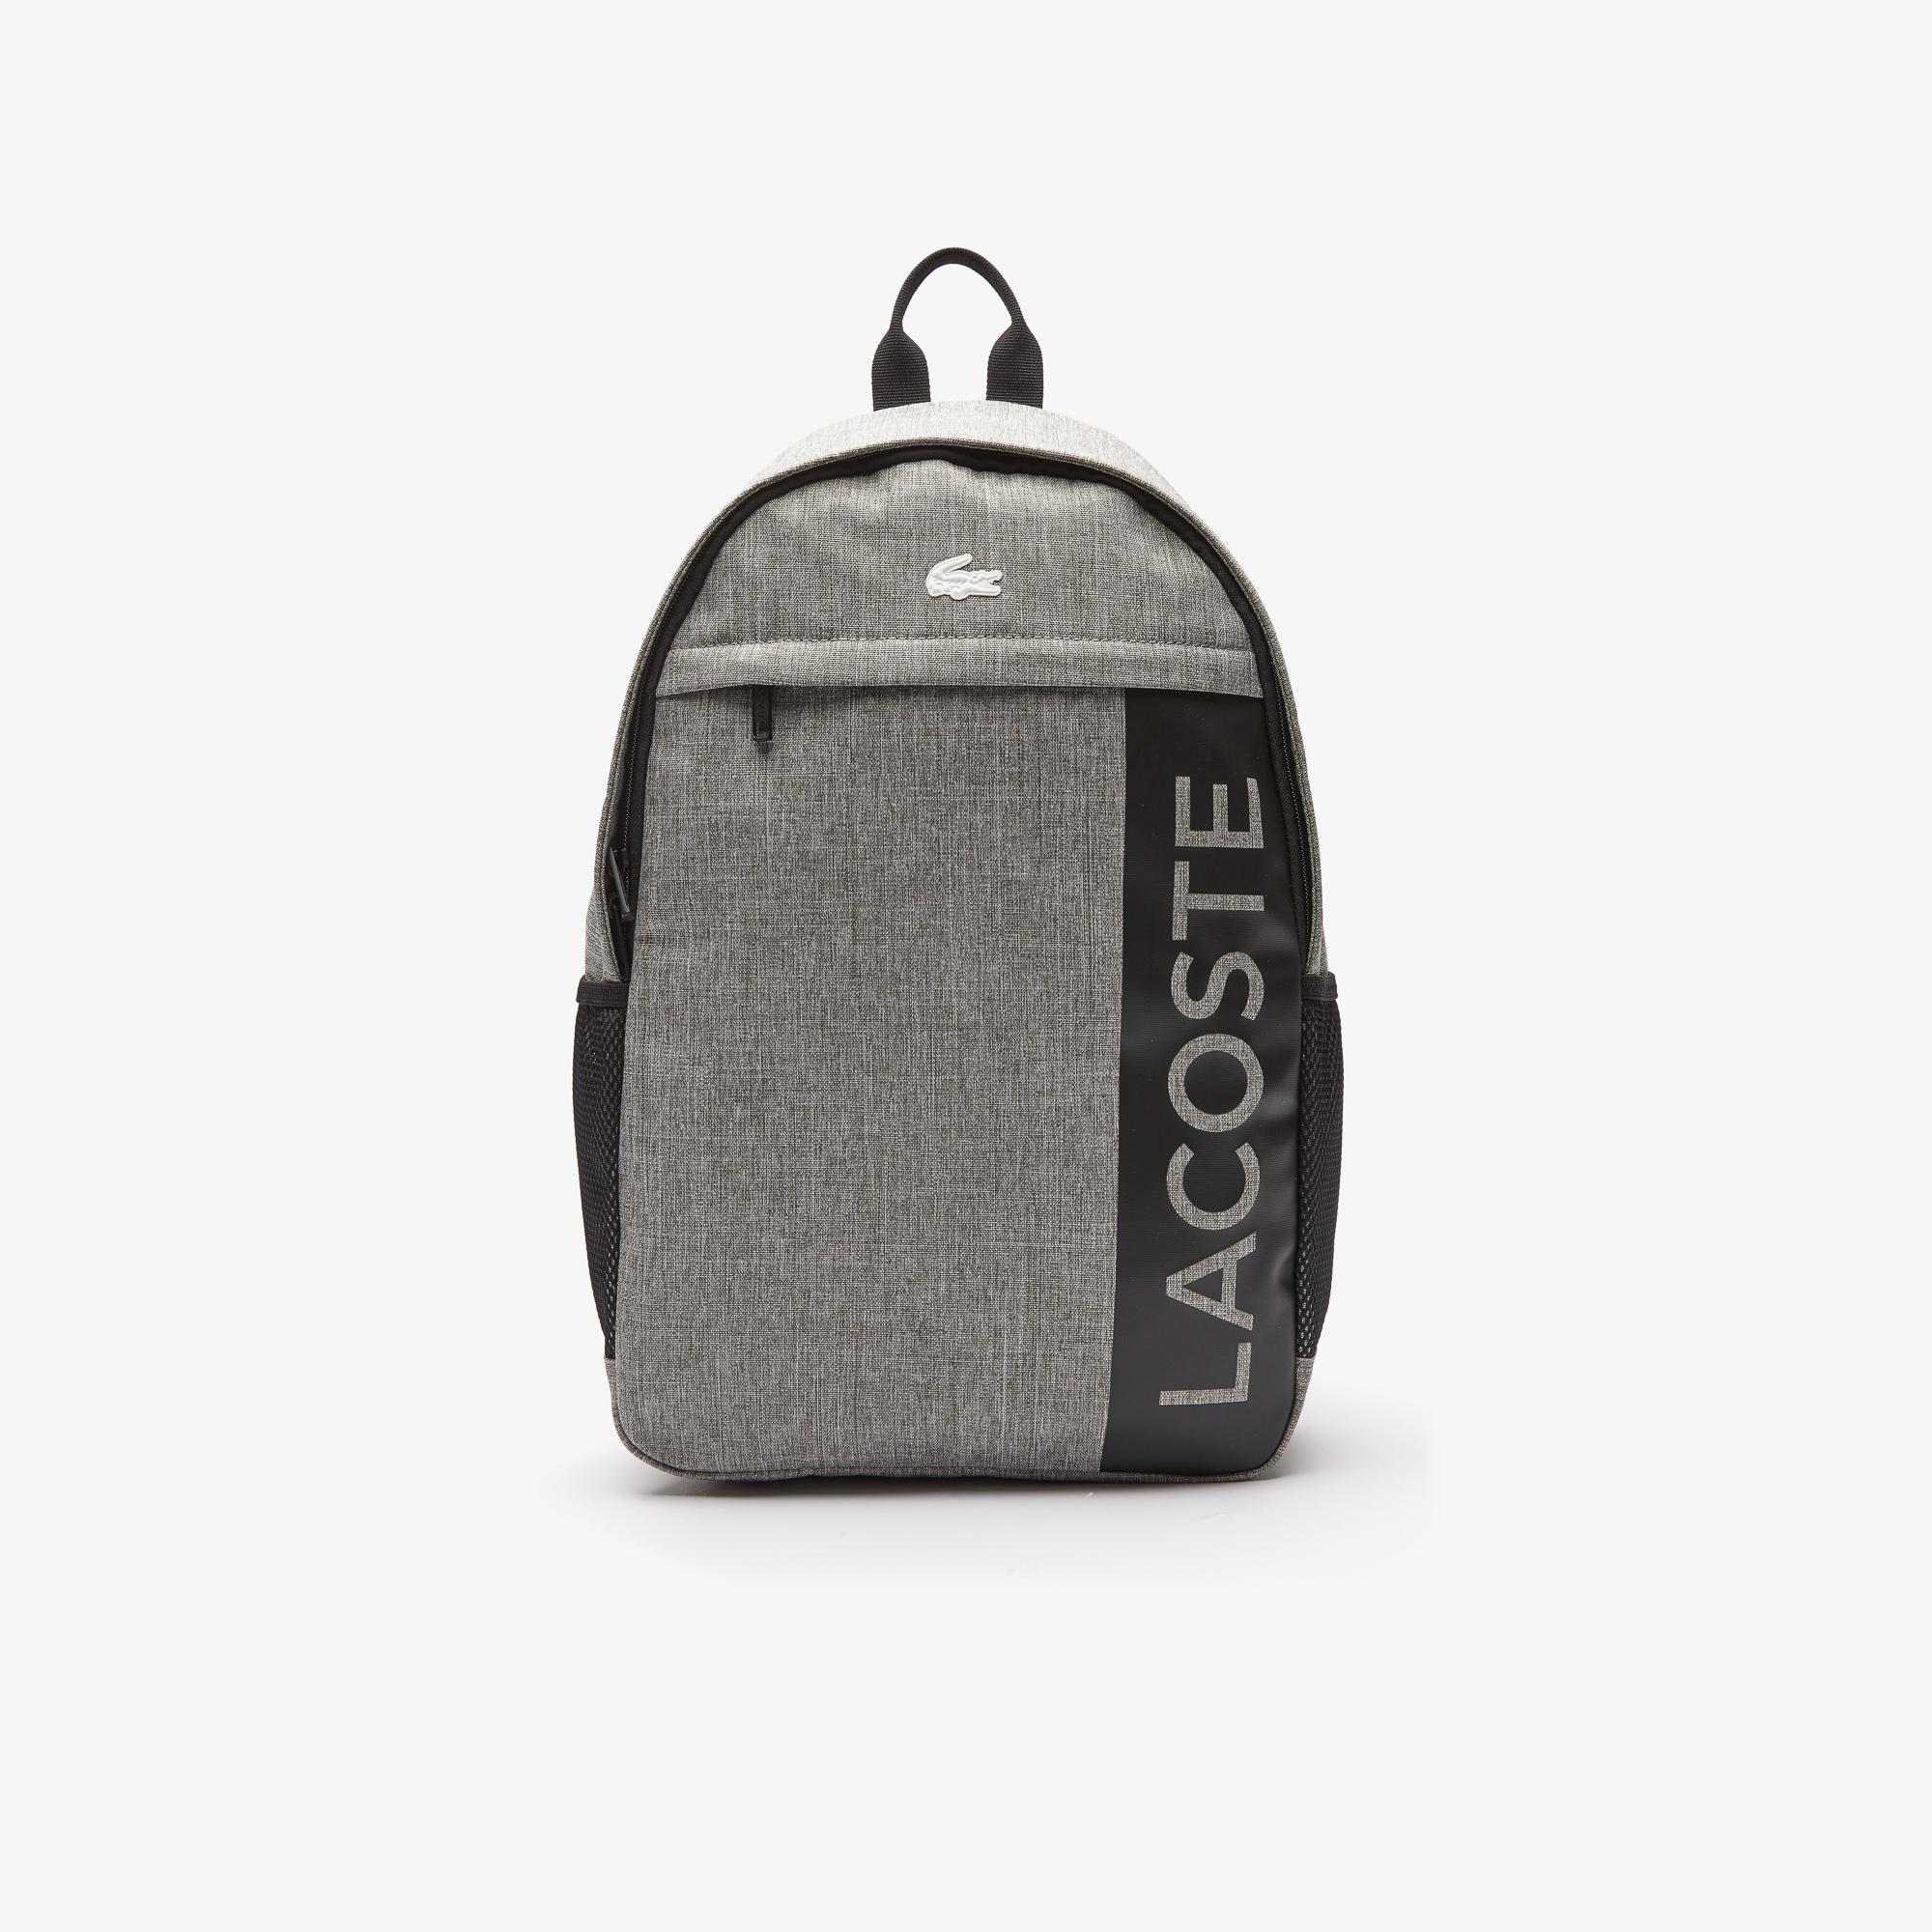 Lacoste Unisex Neocroc Branded Zip Canvas Backpack